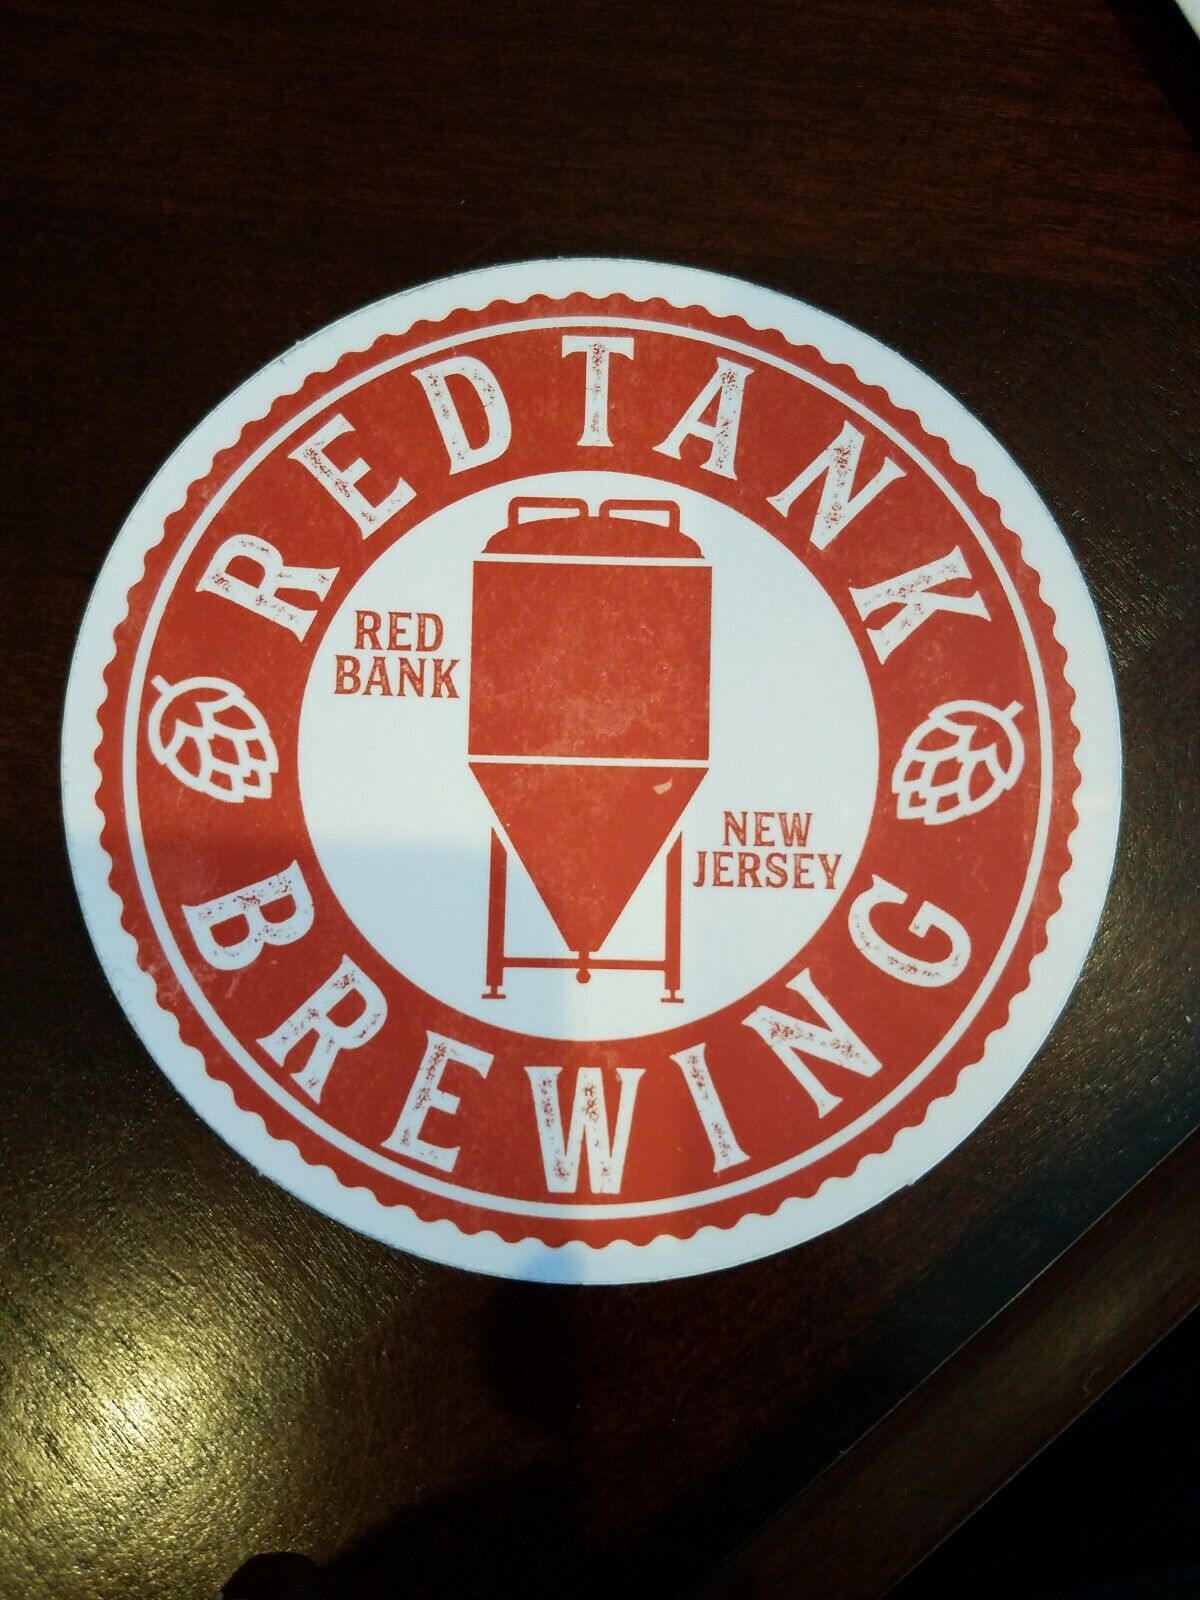 RedTank brewery,craft beer brewing STICKER logo Red Bank NJ